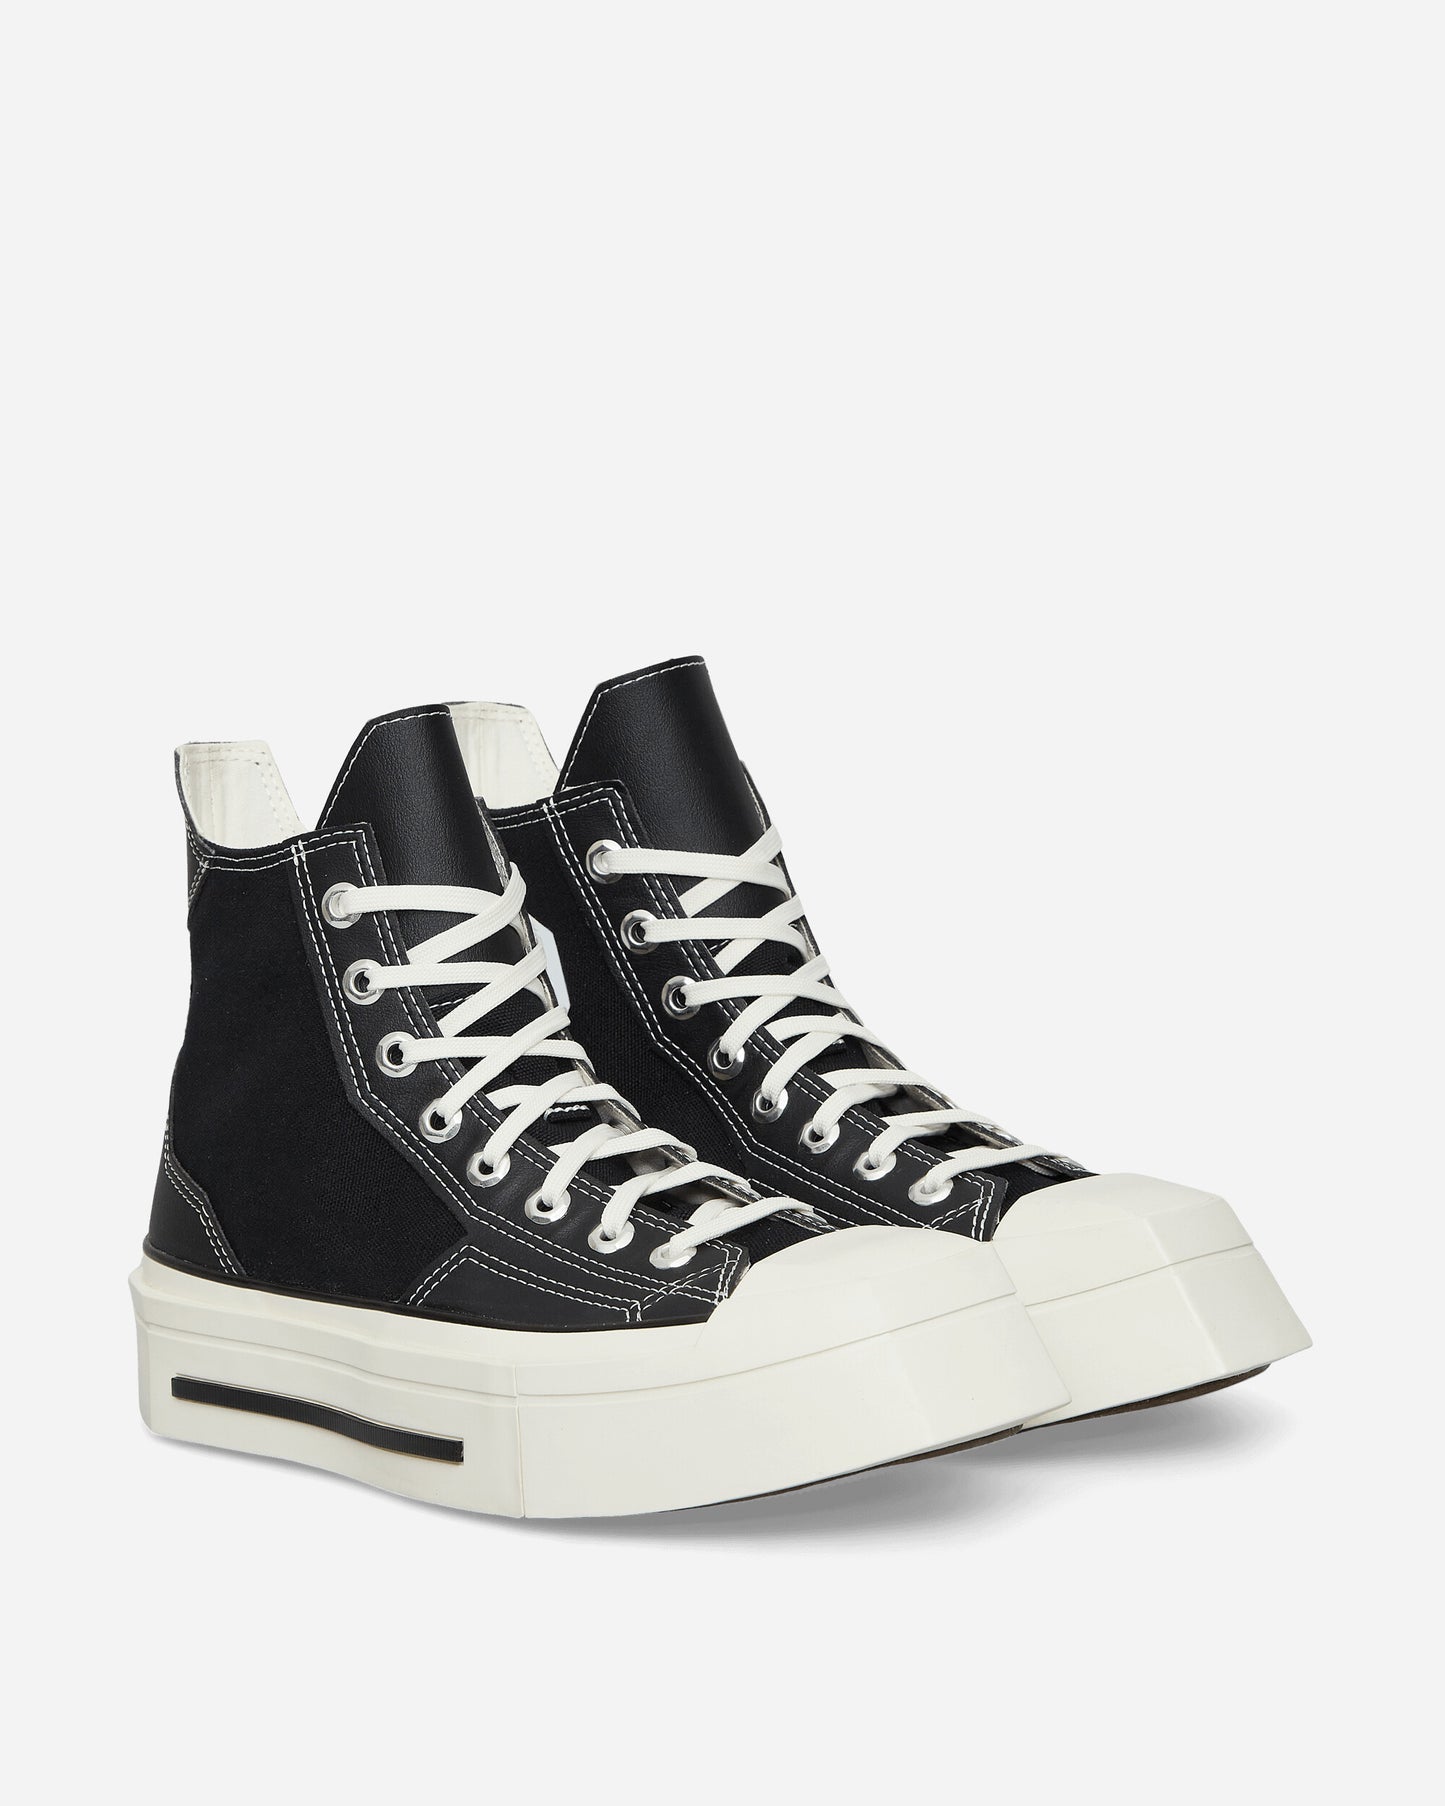 Converse Chuck 70 De Luxe Squared Black/Black/Egret Sneakers High A06435C